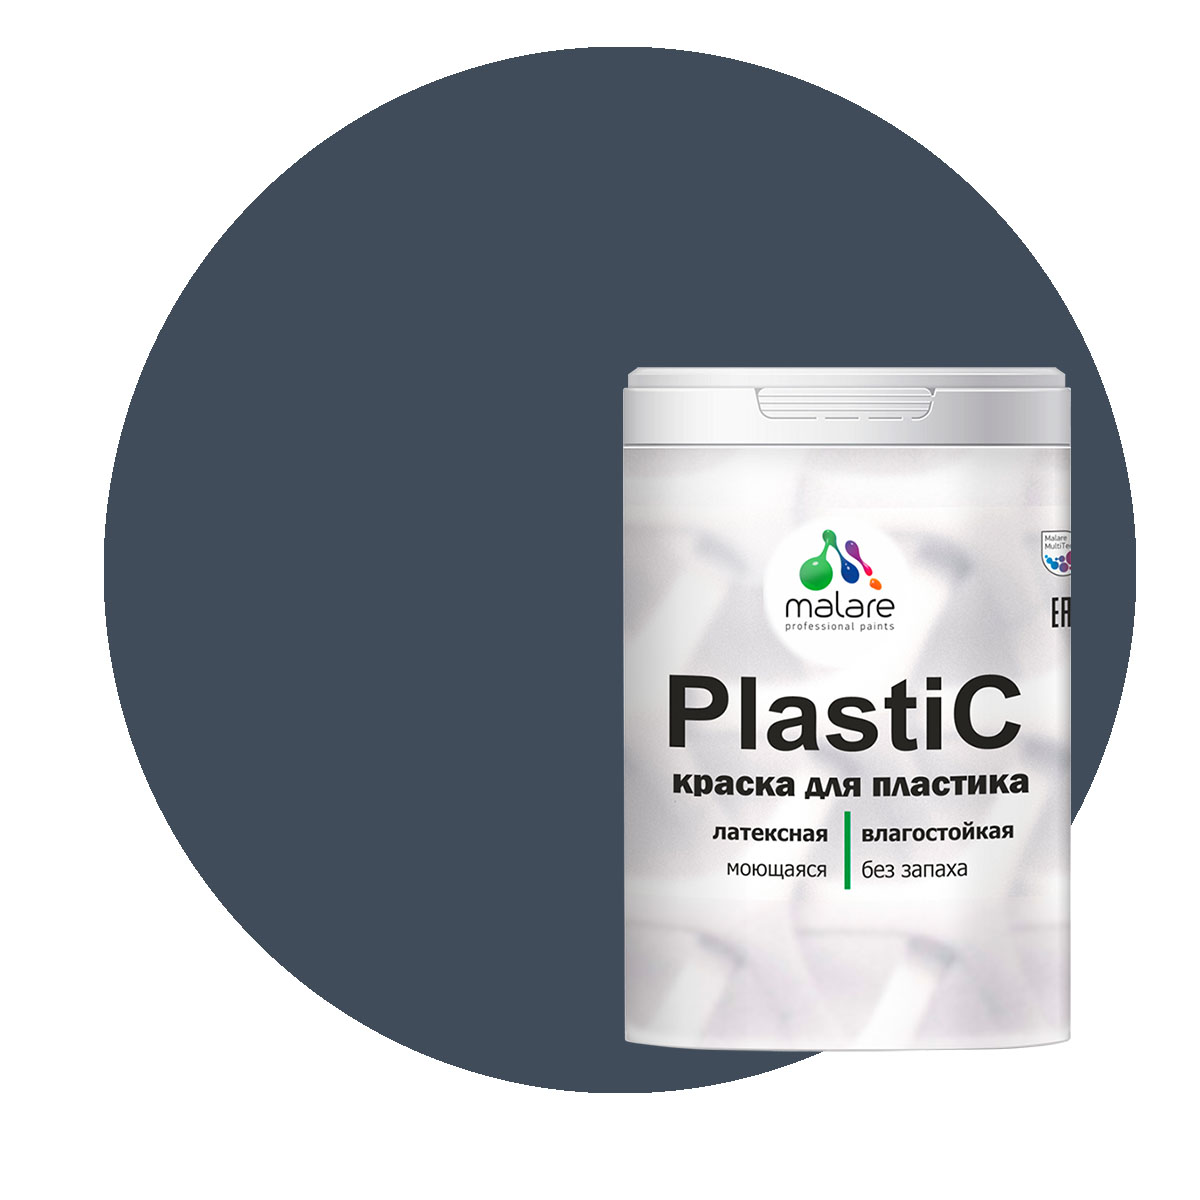 Краска Malare PlastiC для пластика, ПВХ, для сайдинга, гранитный, 2 кг. краска malare plastic для пластика пвх для сайдинга оранжевый закат 2 кг